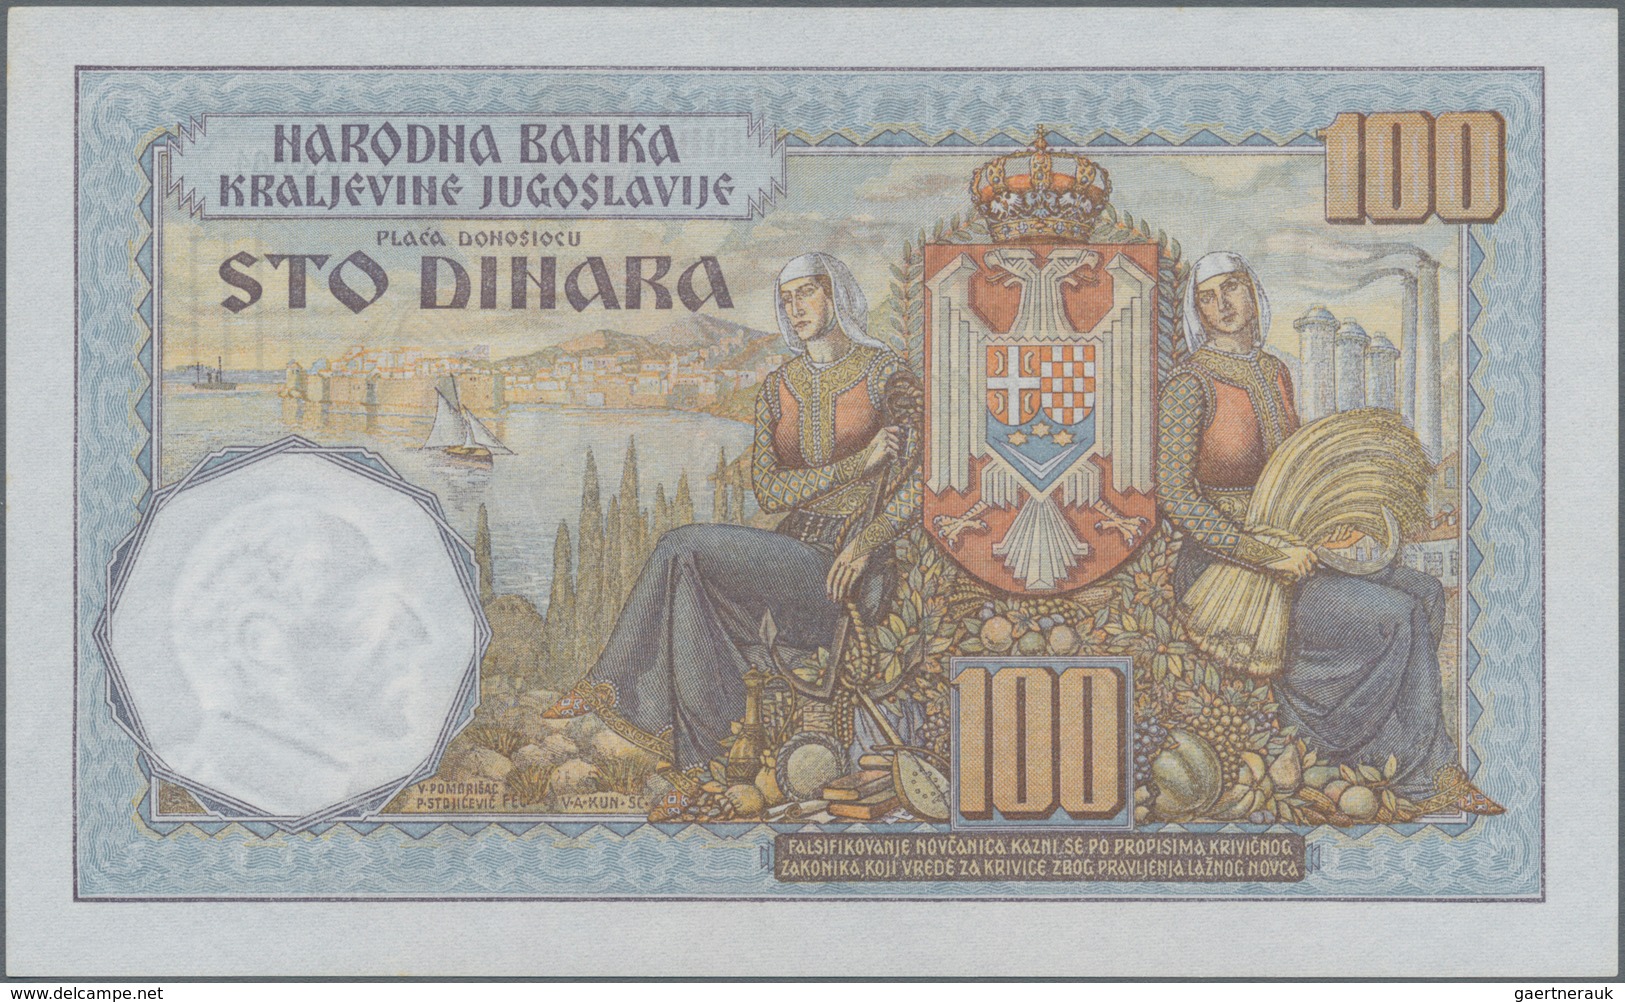 Yugoslavia / Jugoslavien: Kingdom of Yugoslavia set with 5 banknotes comprising 20, 100, 500 and 100